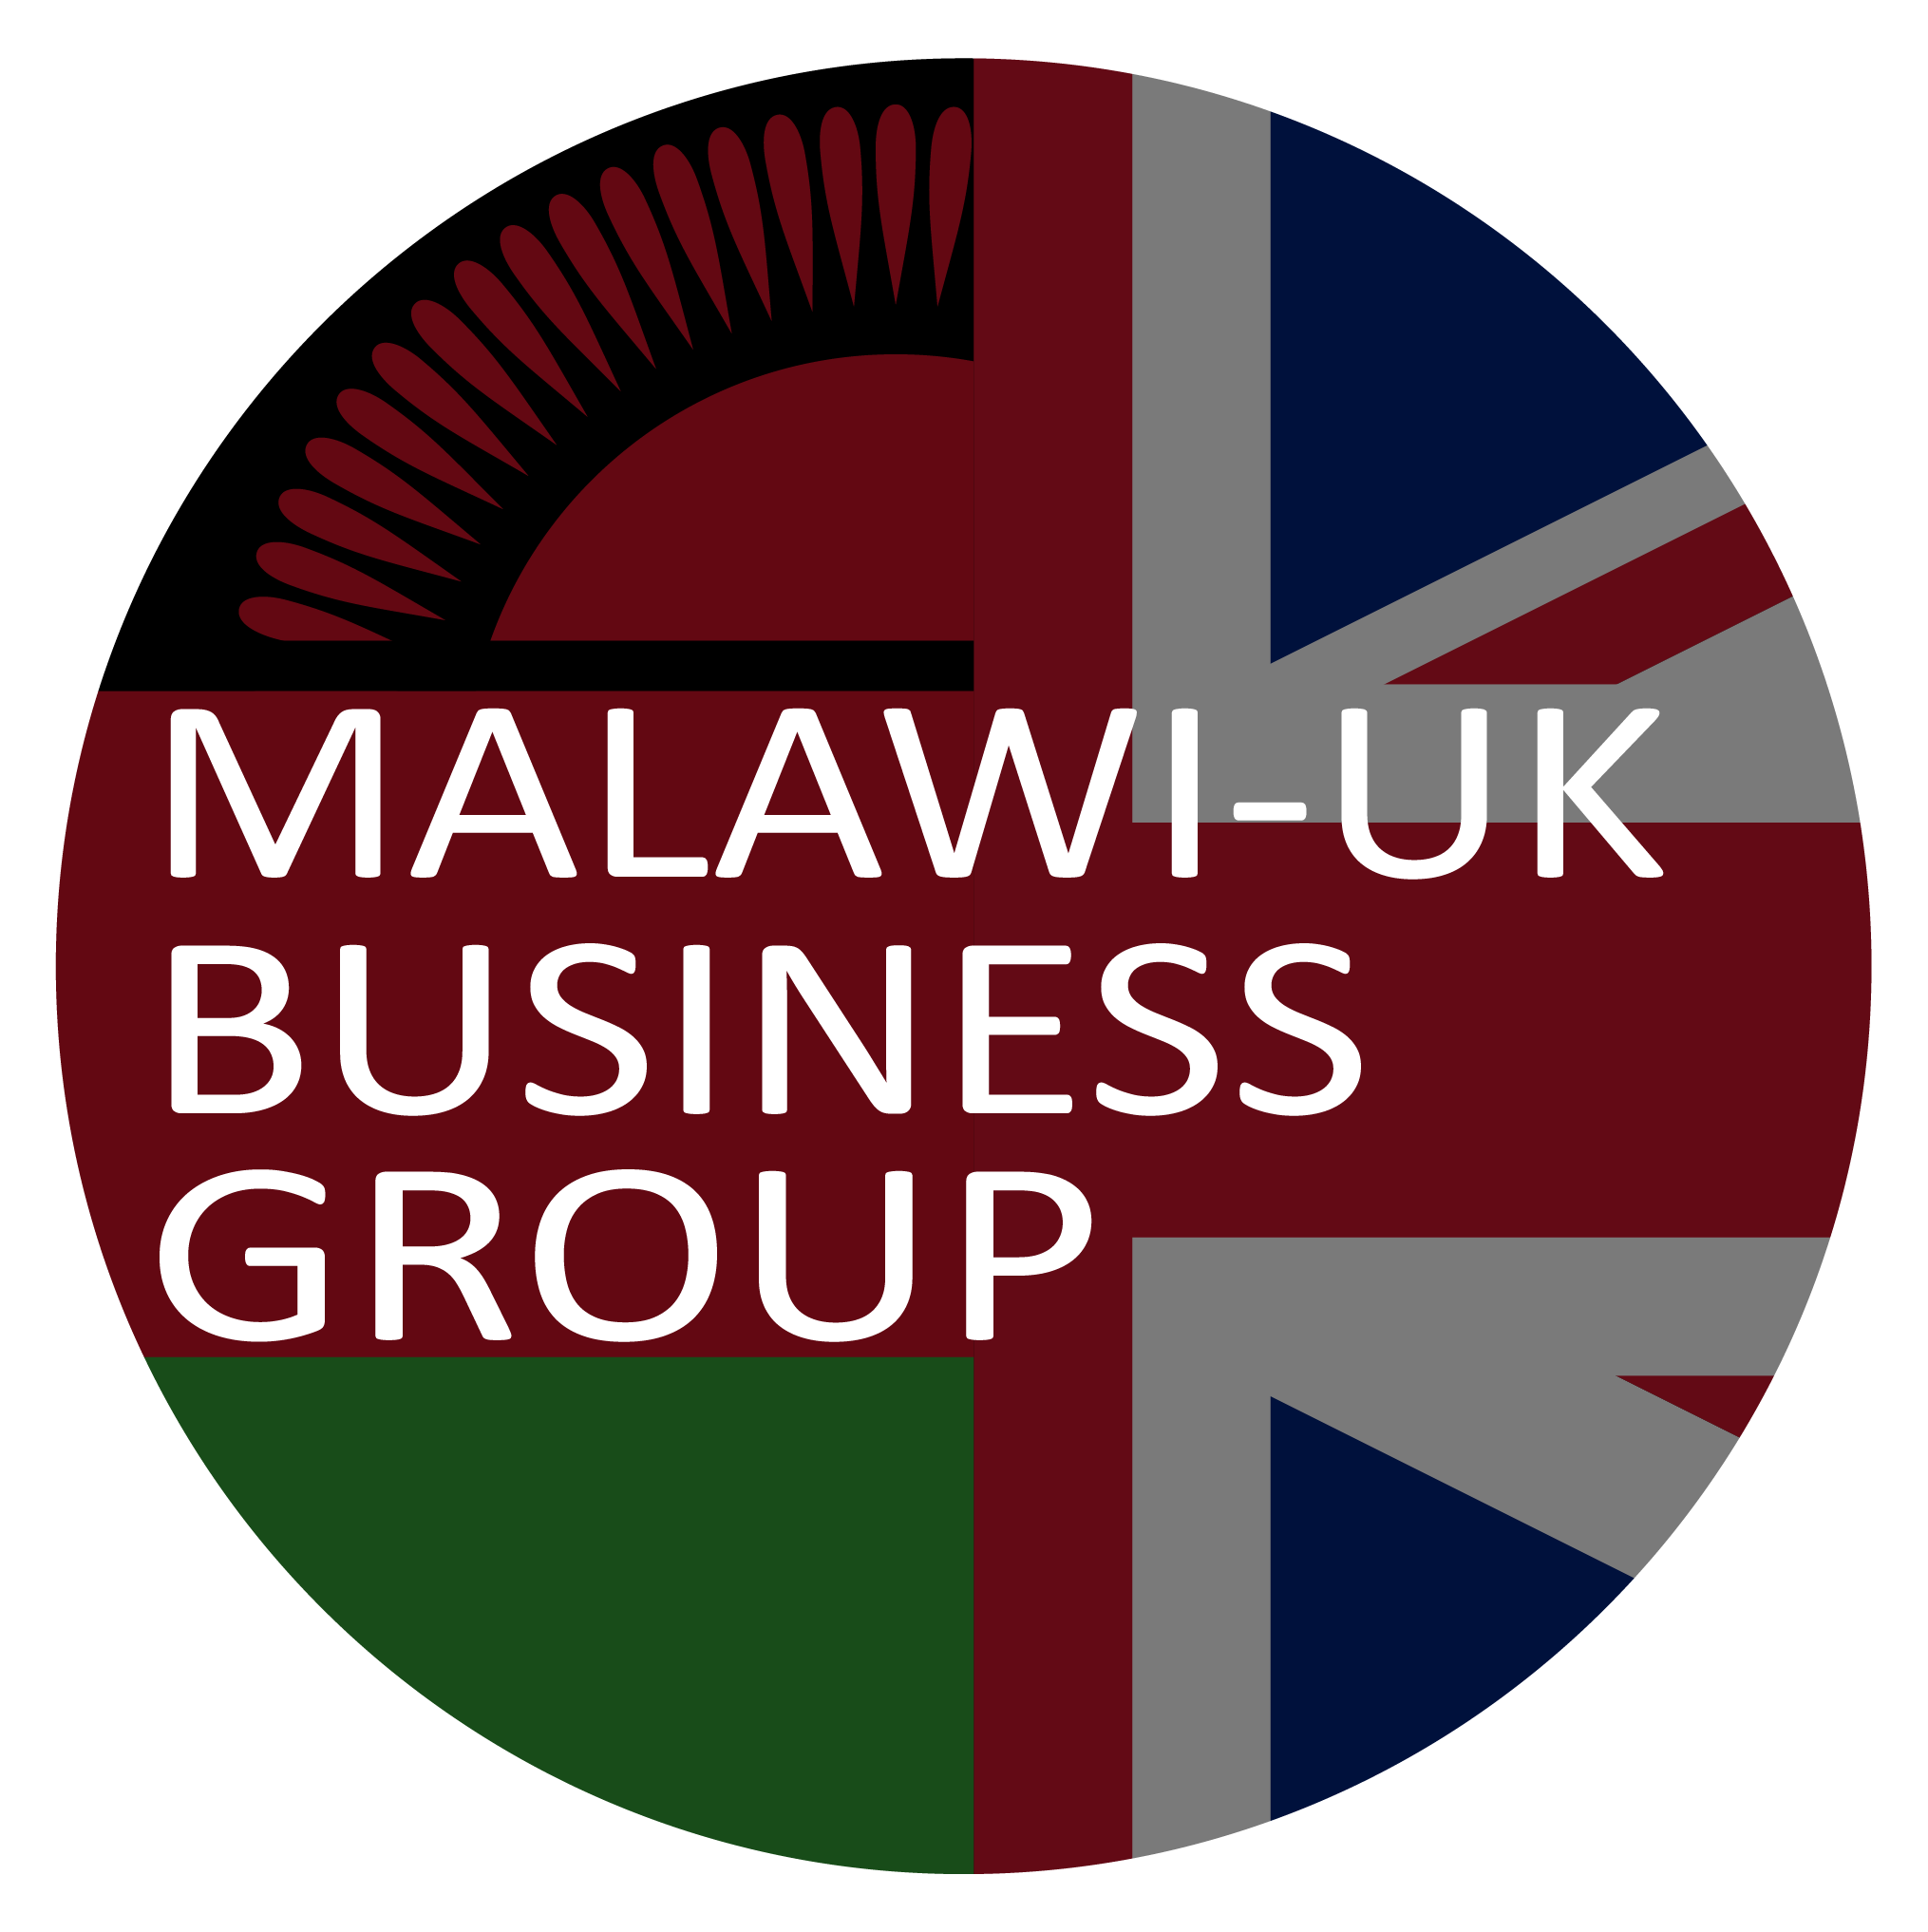 Malawi UK Business group membership logo for beyond water and award winning water charity and social enterprise